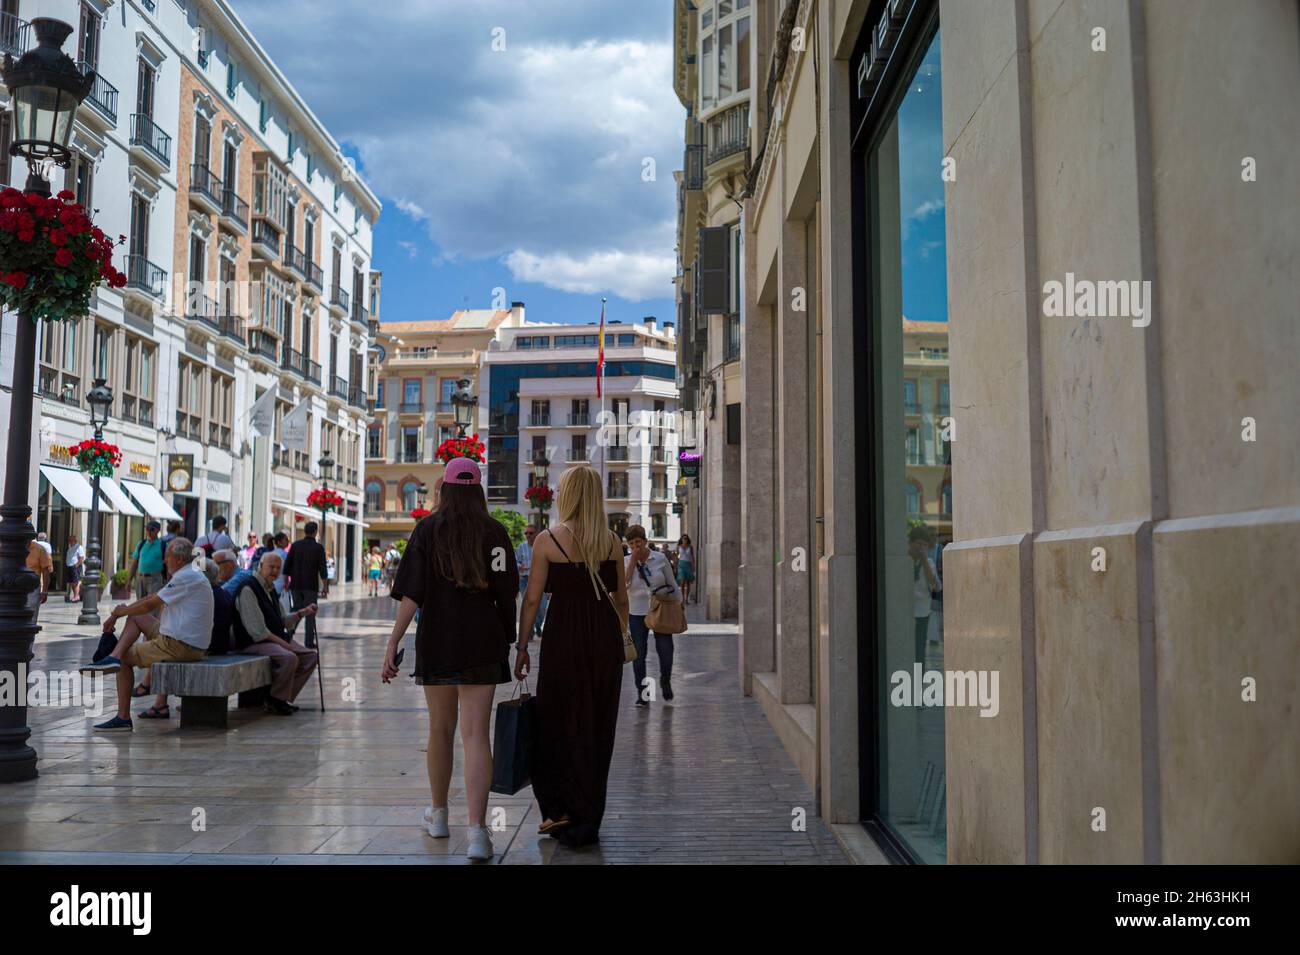 Malaga main street hi-res stock photography and images - Alamy